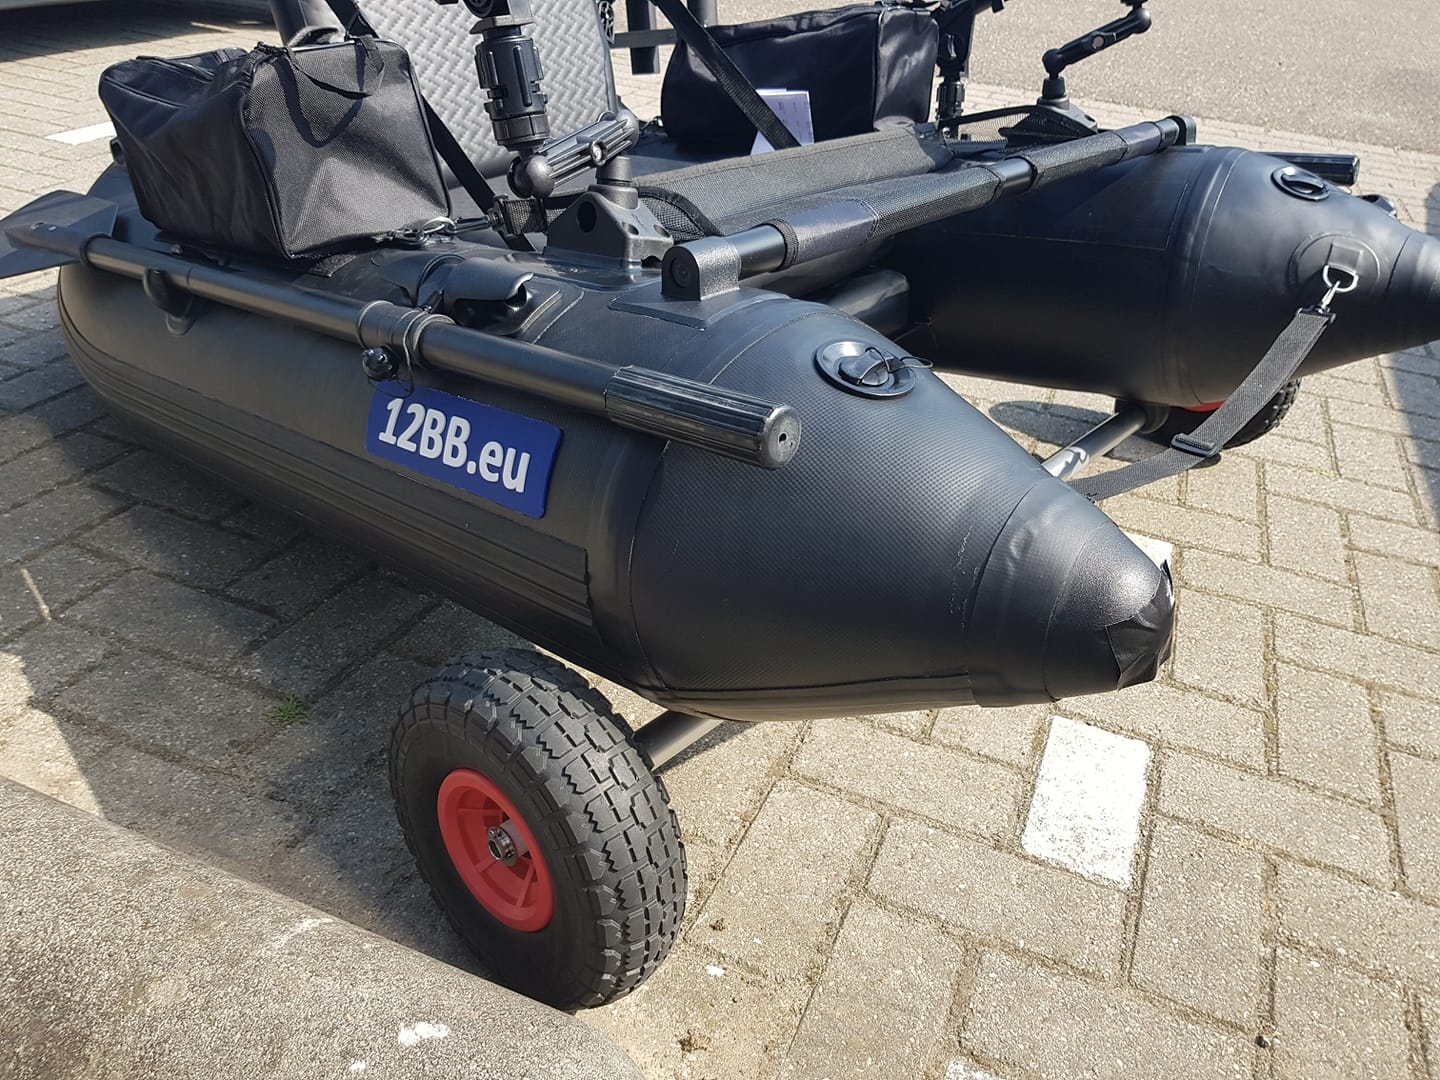 12BB - Belly Boat - Rädersatz - D260mm